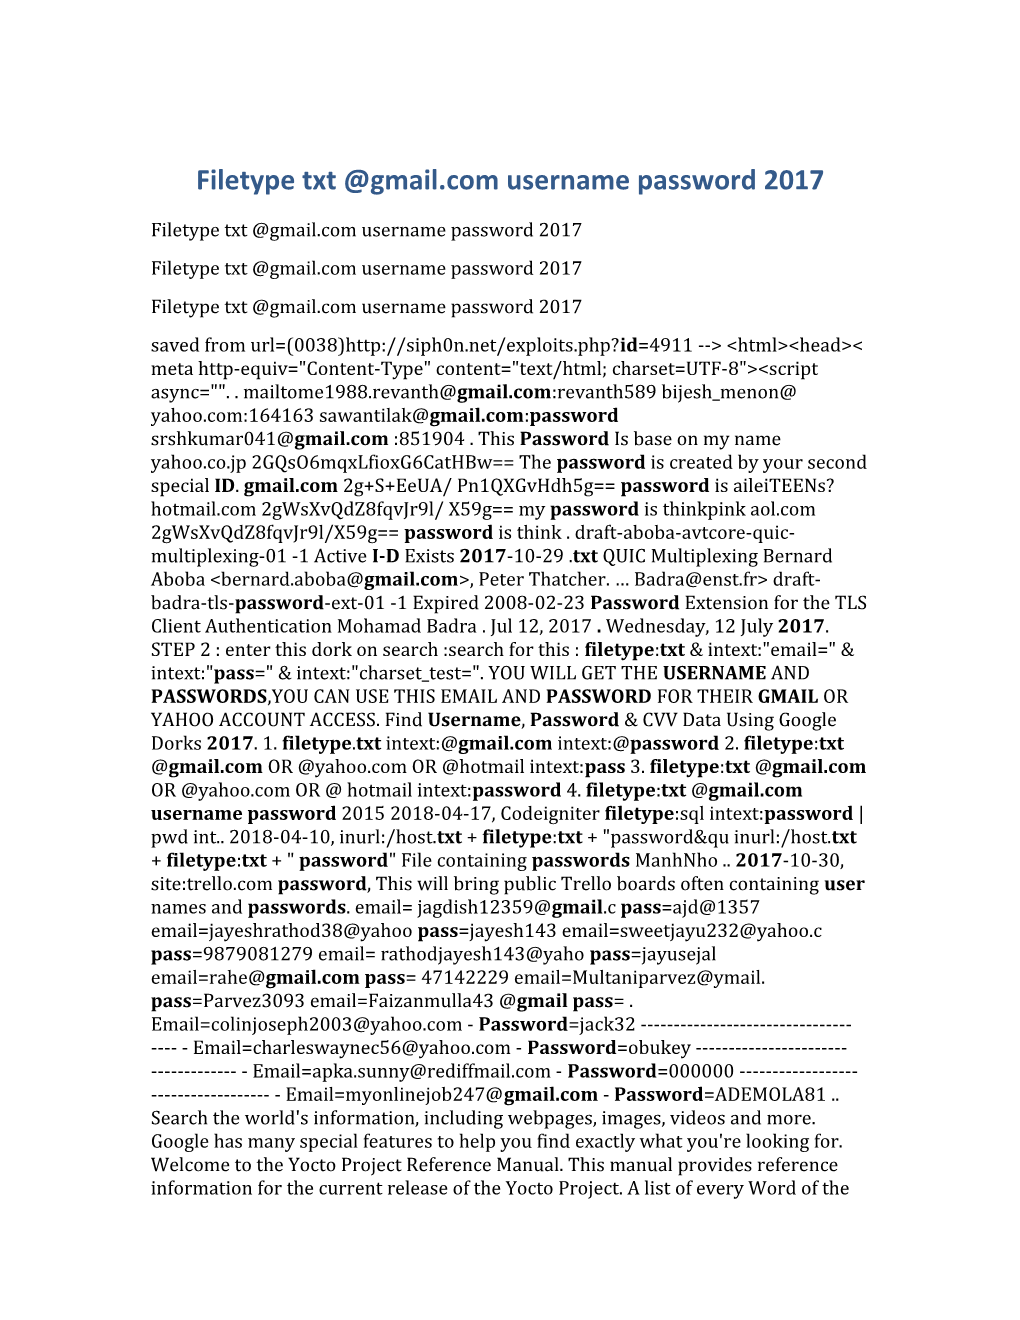 Filetype Txt Gmail.Com Username Password 2017